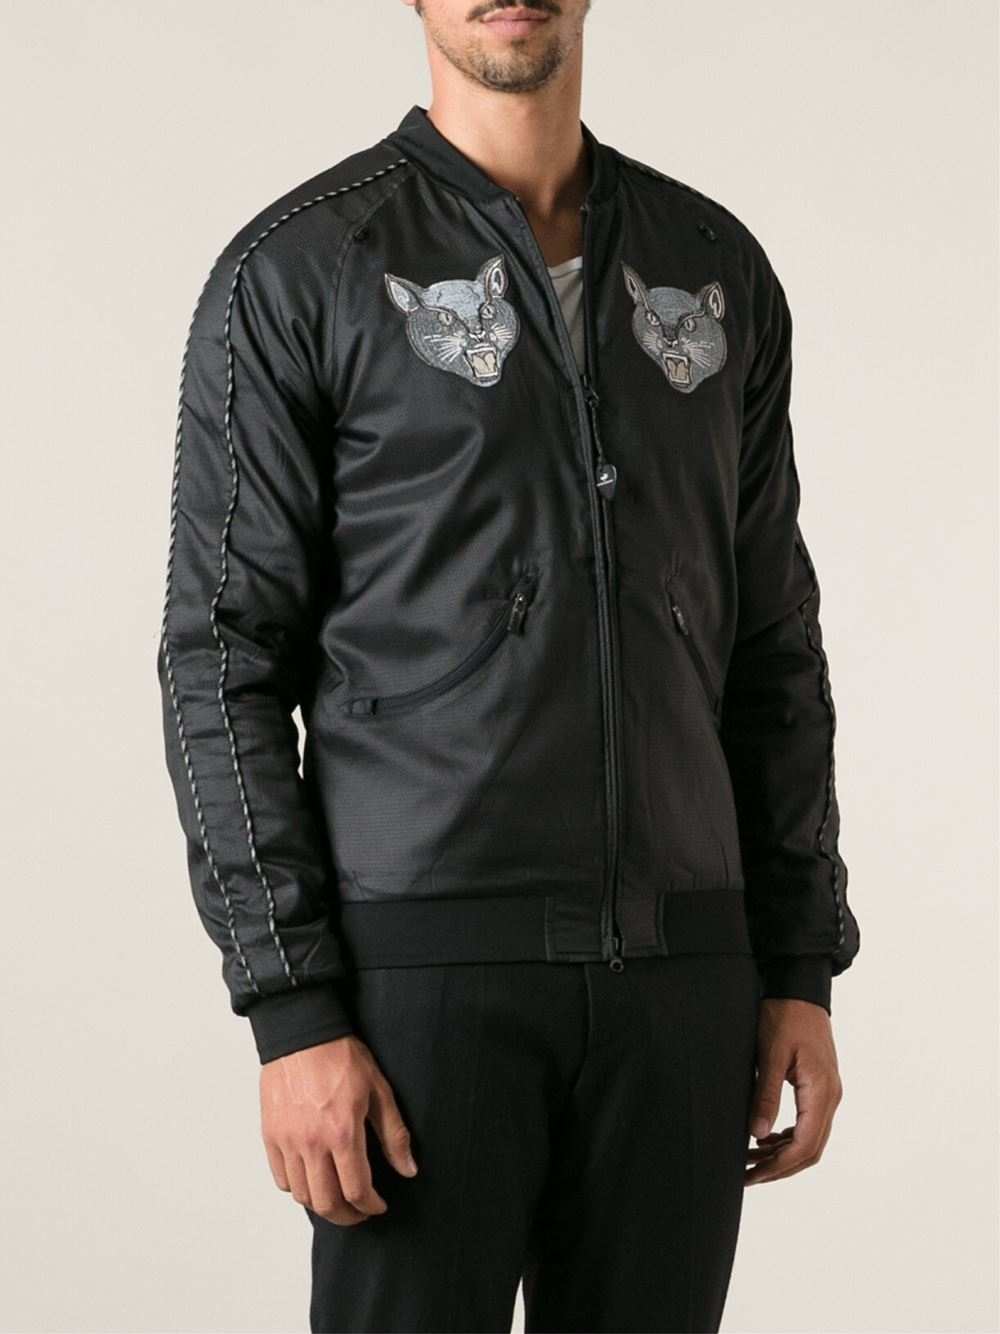 puma mihara yasuhiro jacket Off 52% - sirinscrochet.com